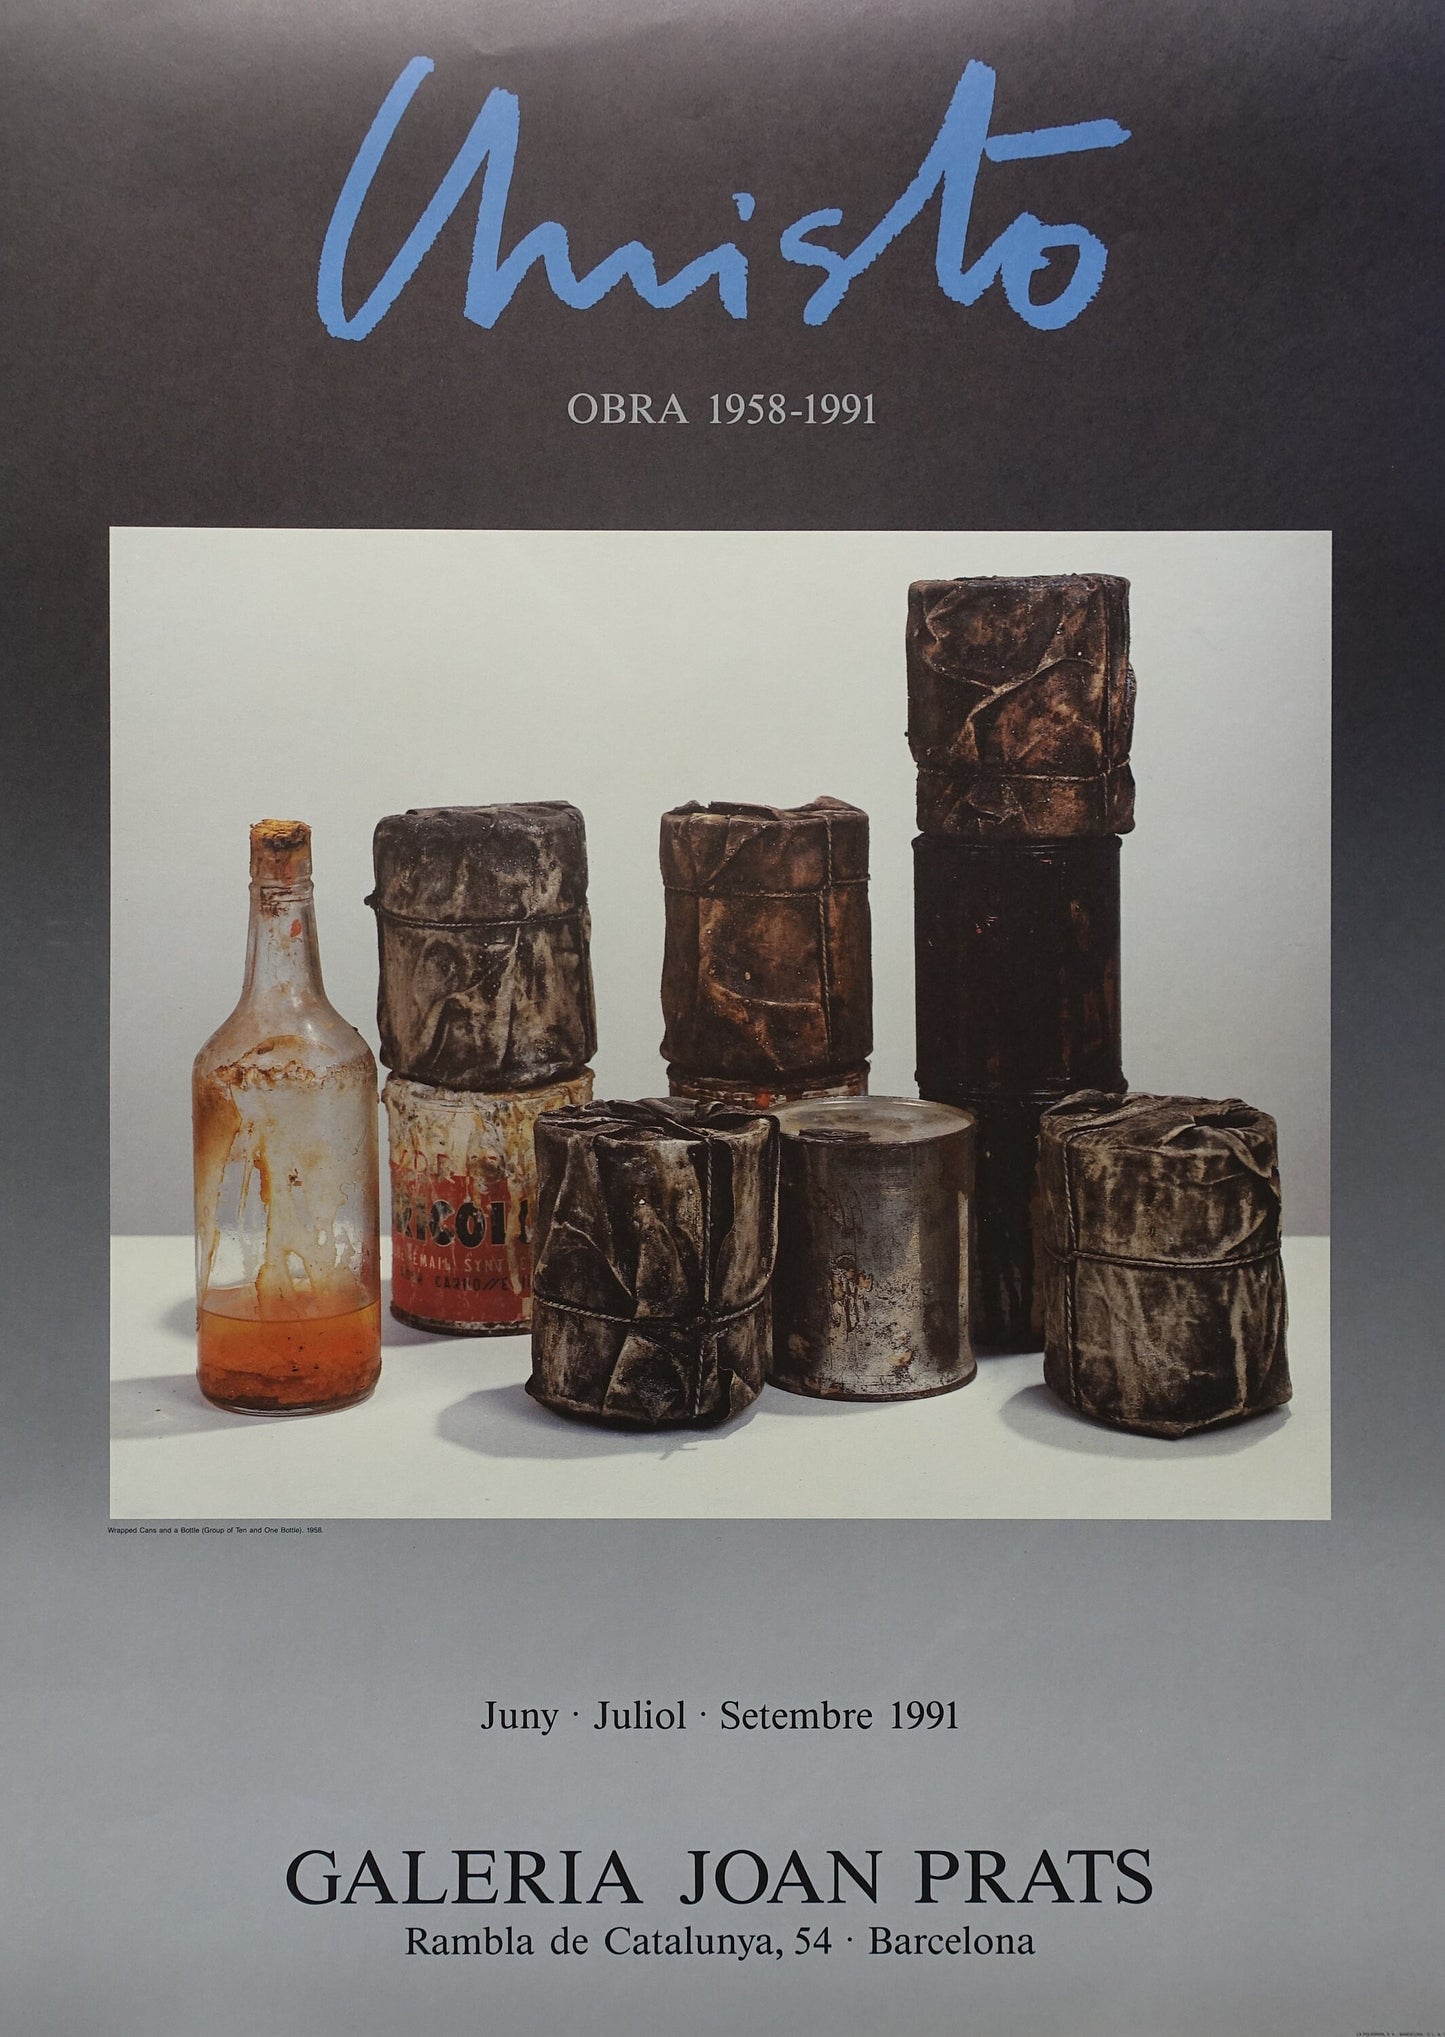 1991 Christo Spanish Exhibition Poster - Original Vintage Poster